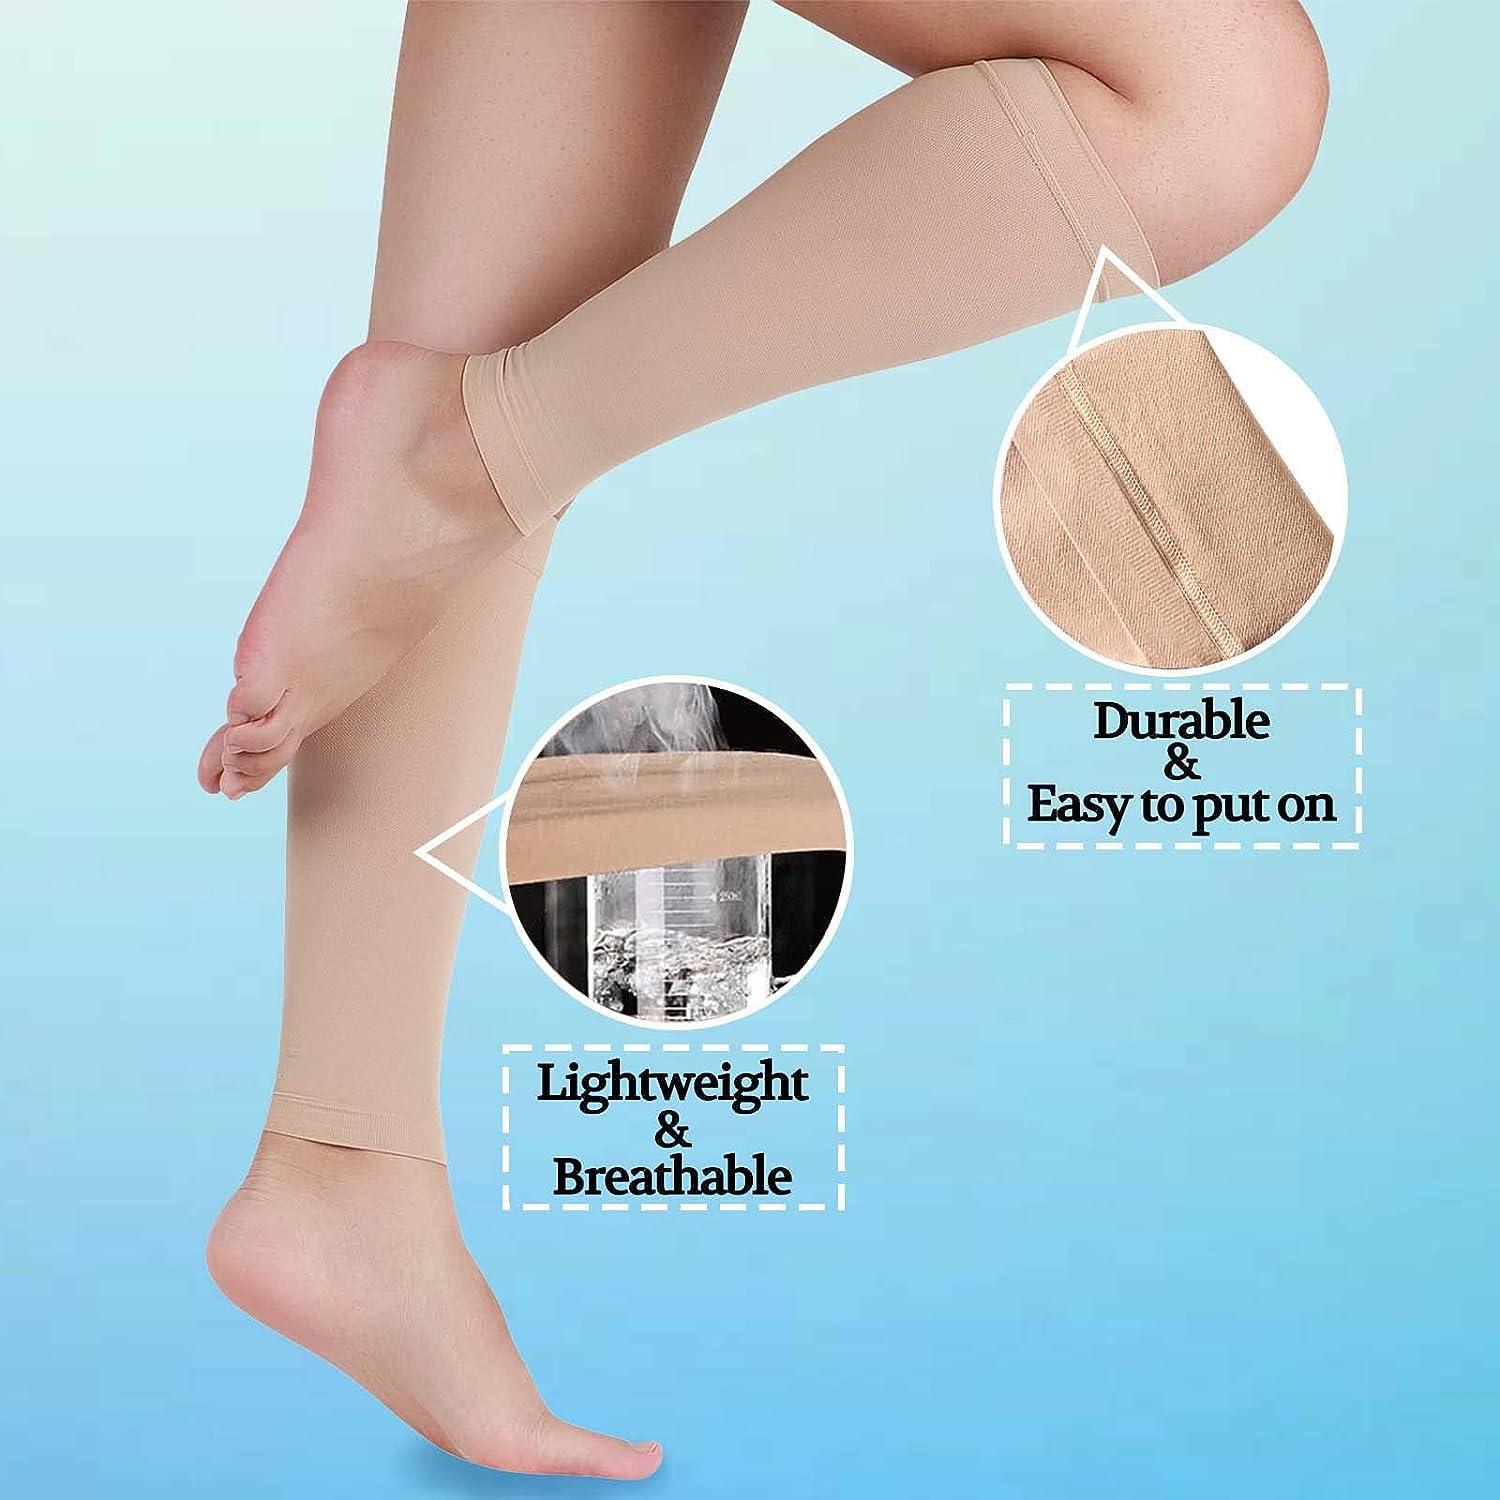 Leg Compression Sleeve Socks Hose Women Men Varicose Veins Edema Calf 30-40  mmHg 